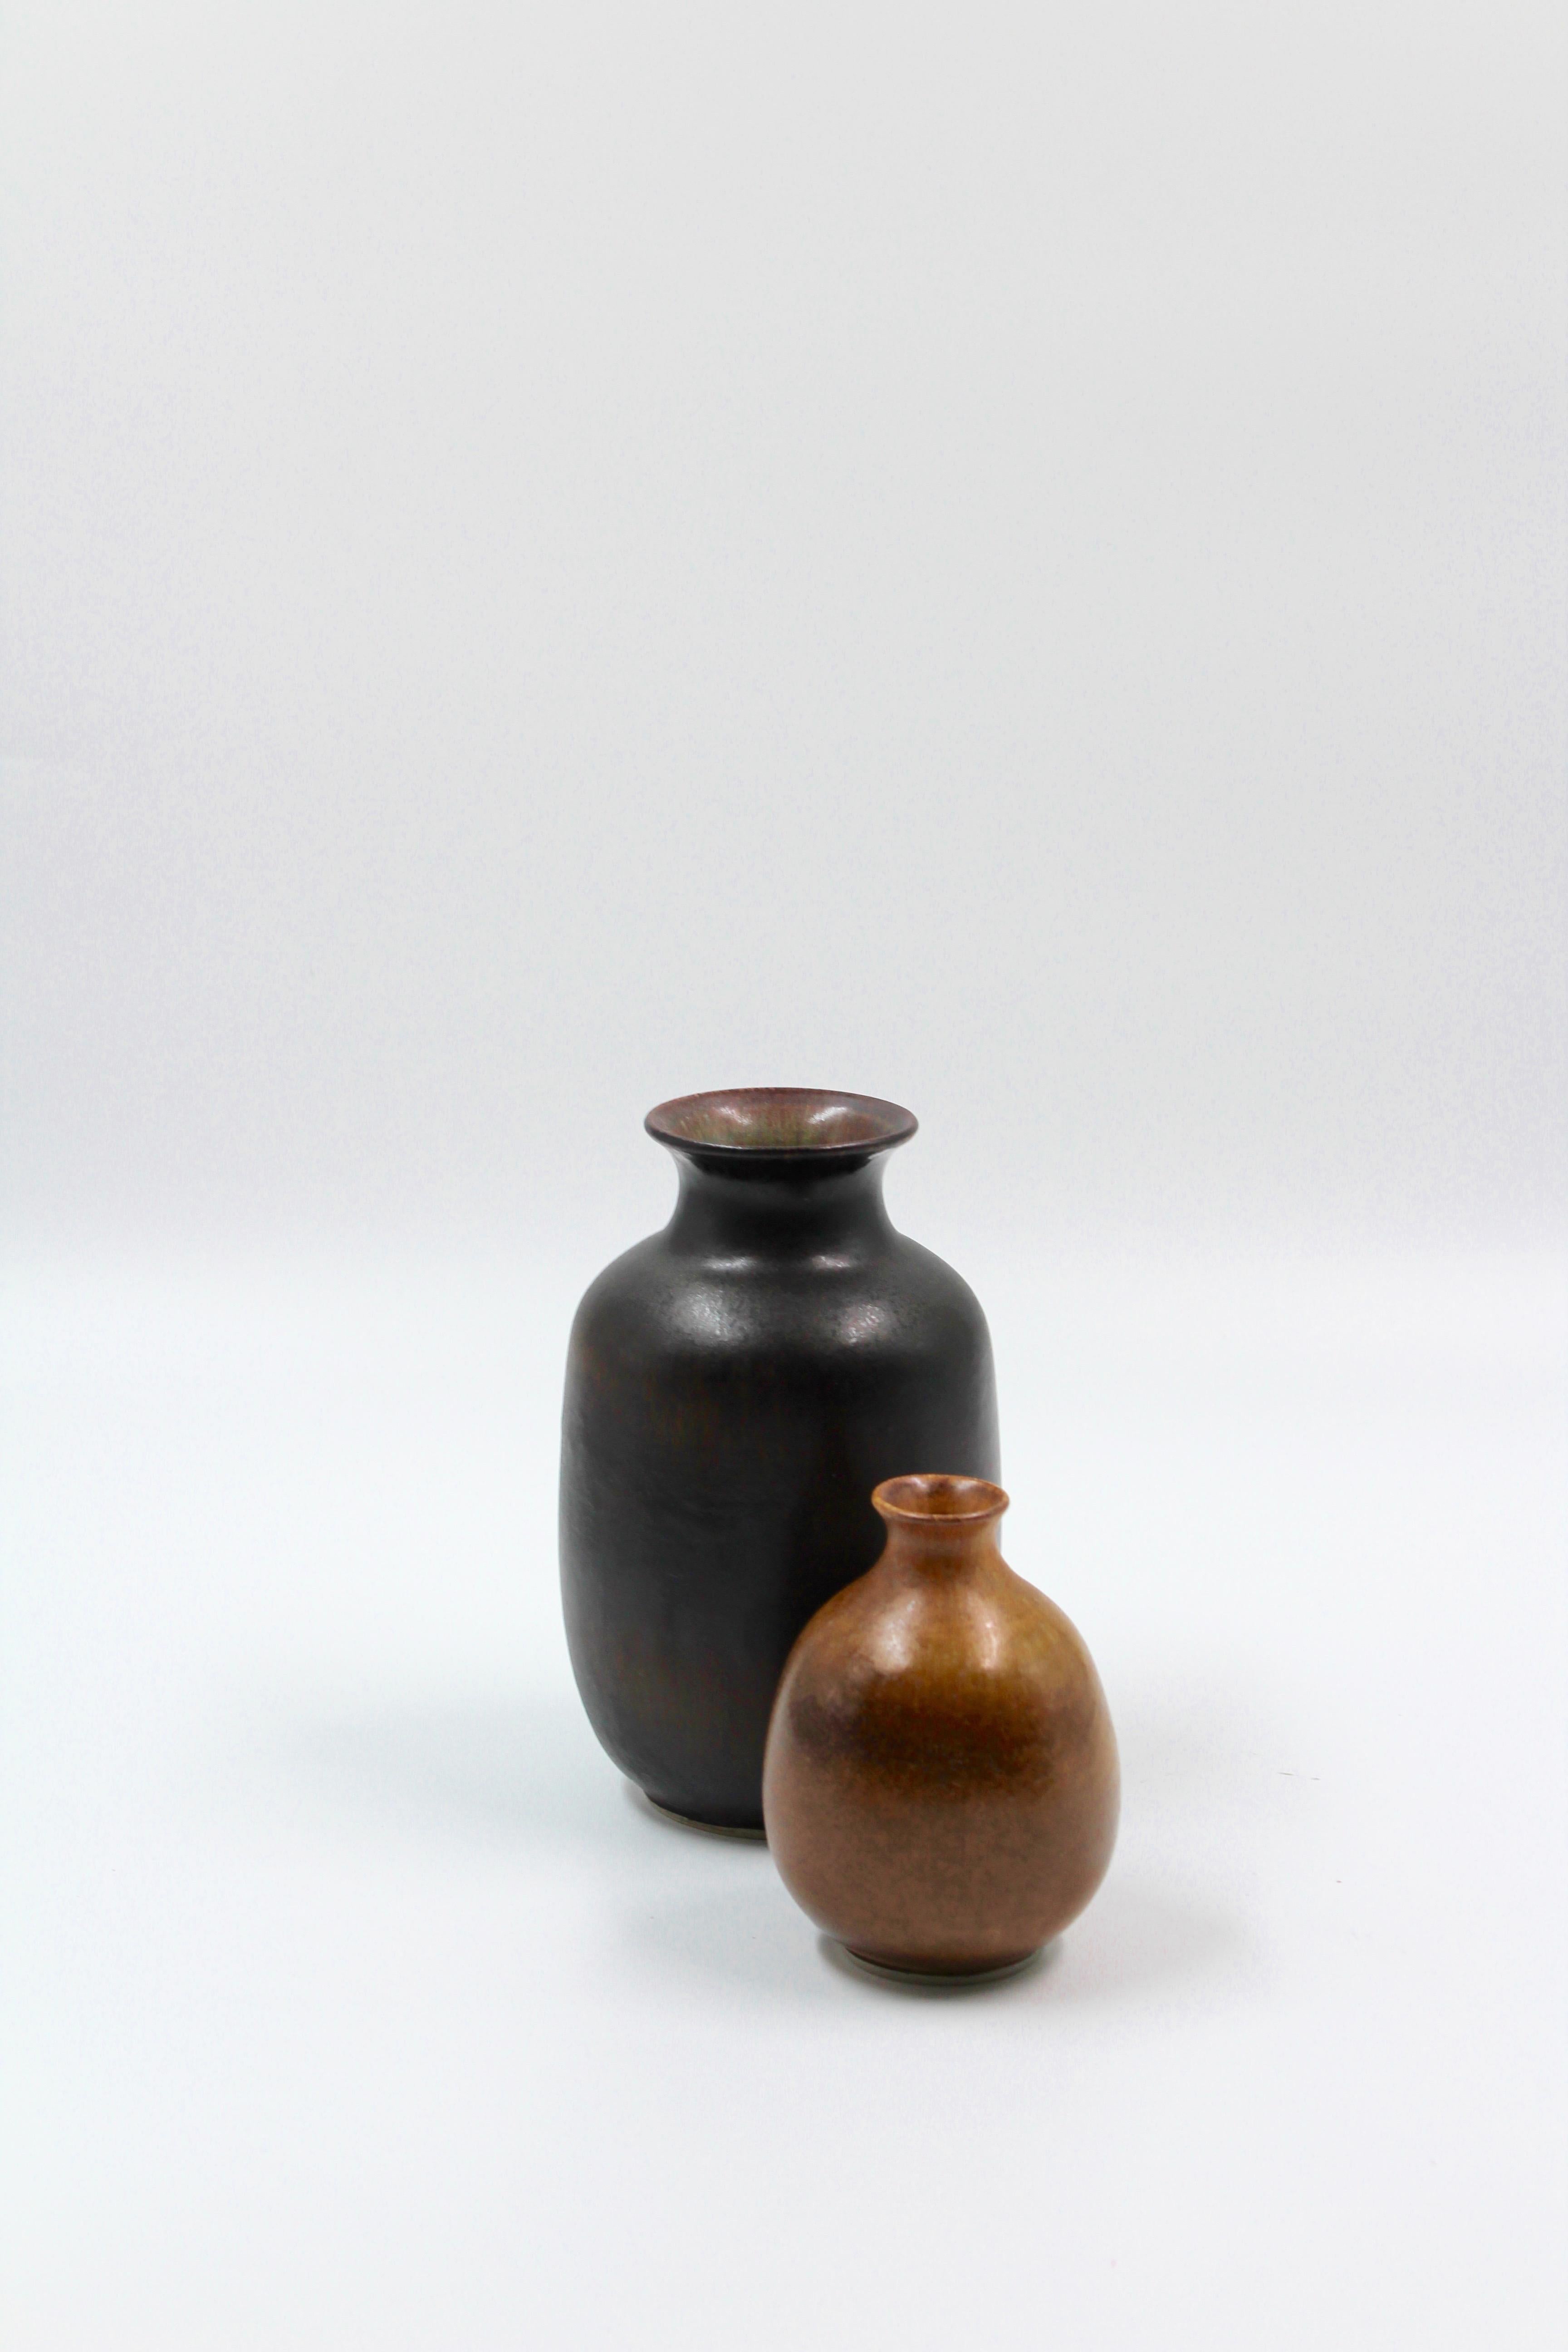 Midcentury Ceramic Vases by Egon Larsson, Höganäs Keramik, 1950s For Sale 2